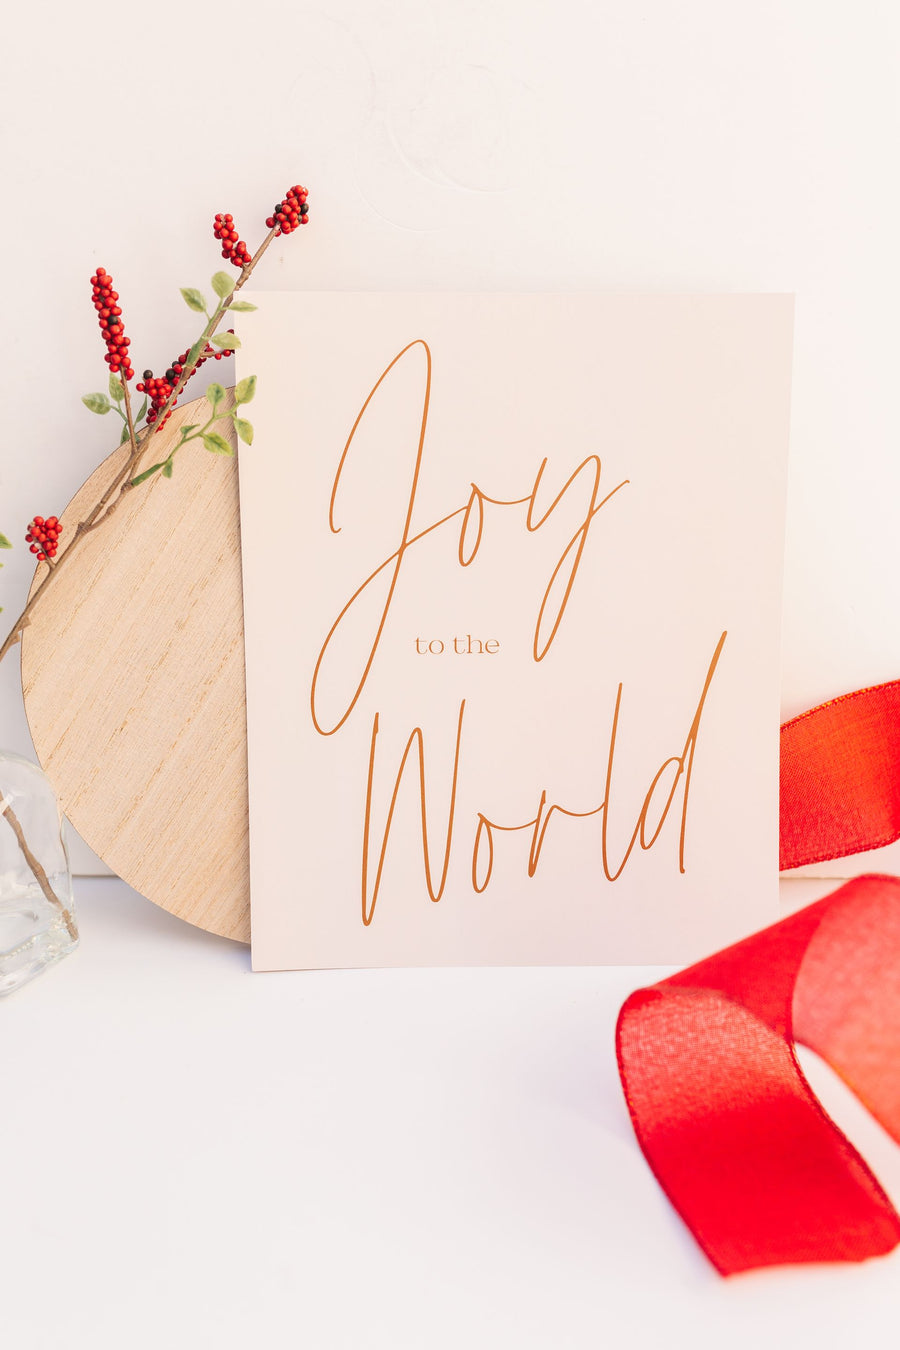 Joy to the World Print (8x10)